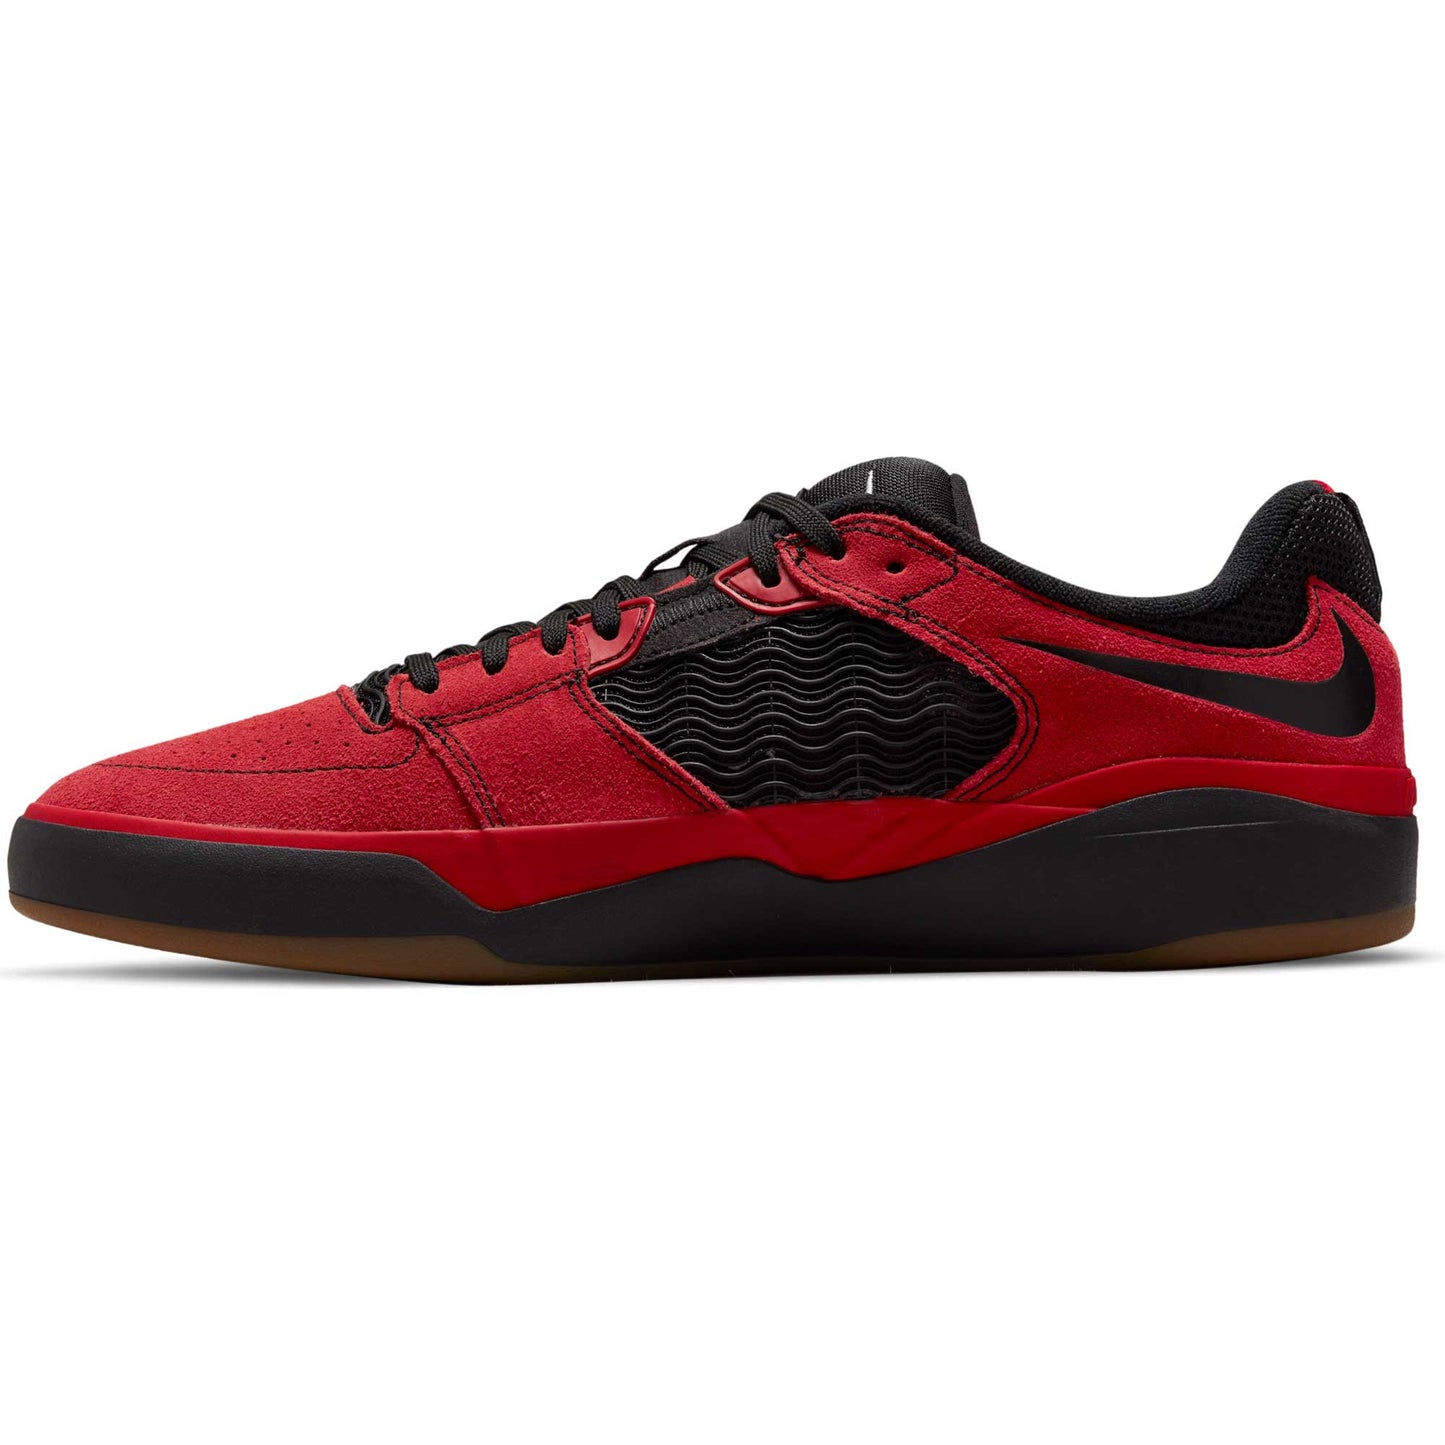 Nike SB Ishod Wair, varsity red/black-varsity red-white - Tiki Room Skateboards - 7